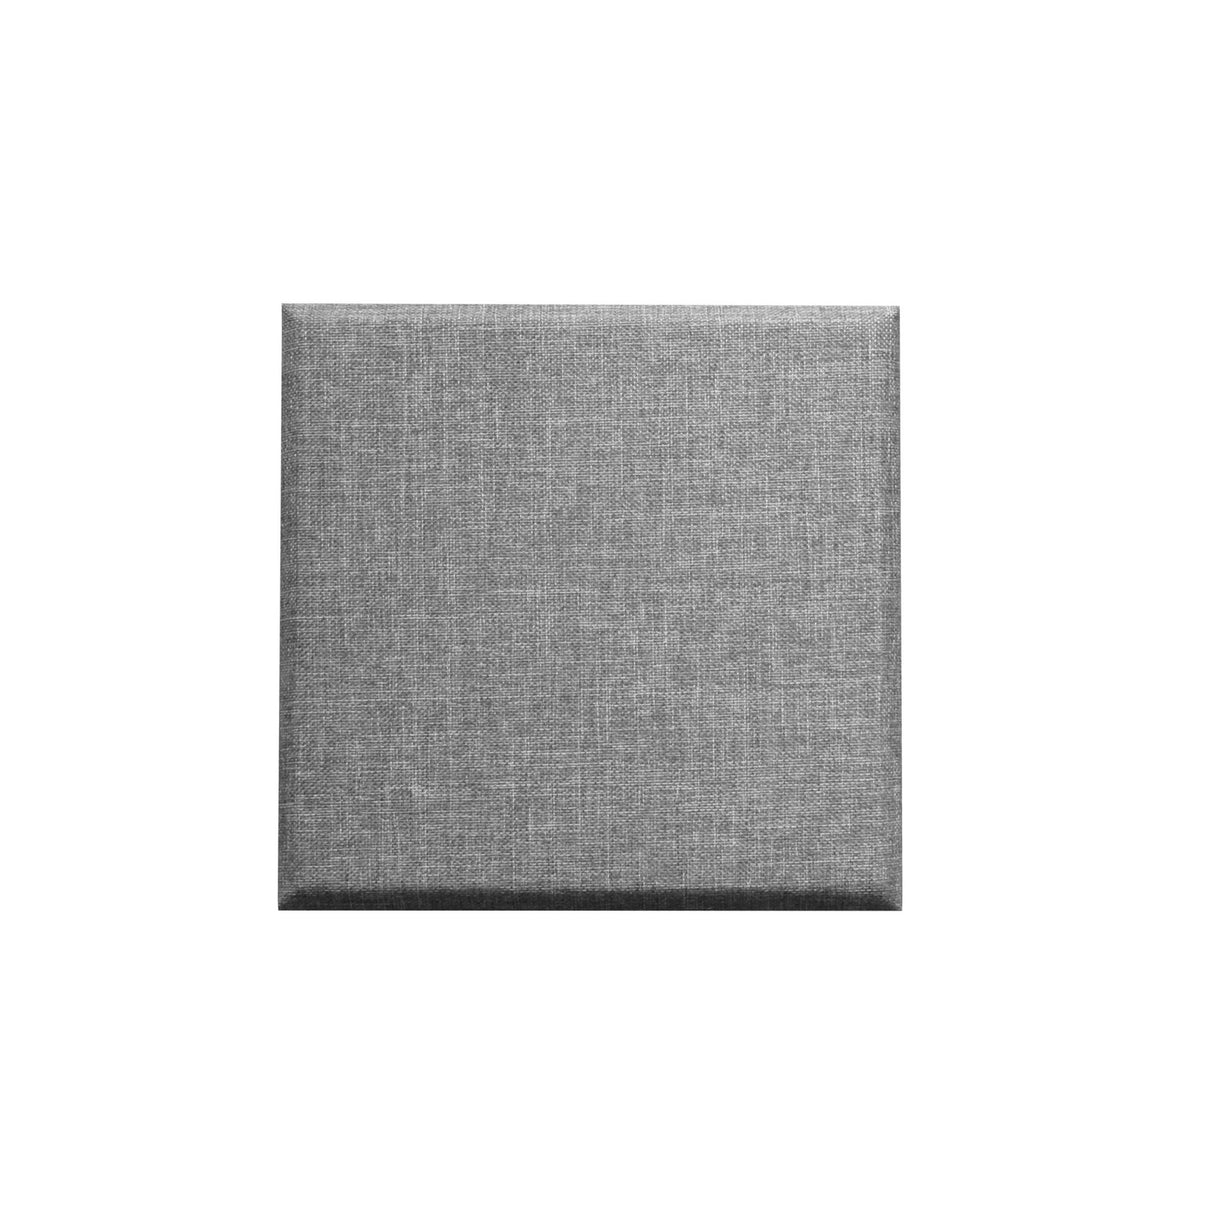 Primacoustic Control Cube 24 x 24 x 2-Inch Acoustic Panels, Grey 12-Set, Square Edge